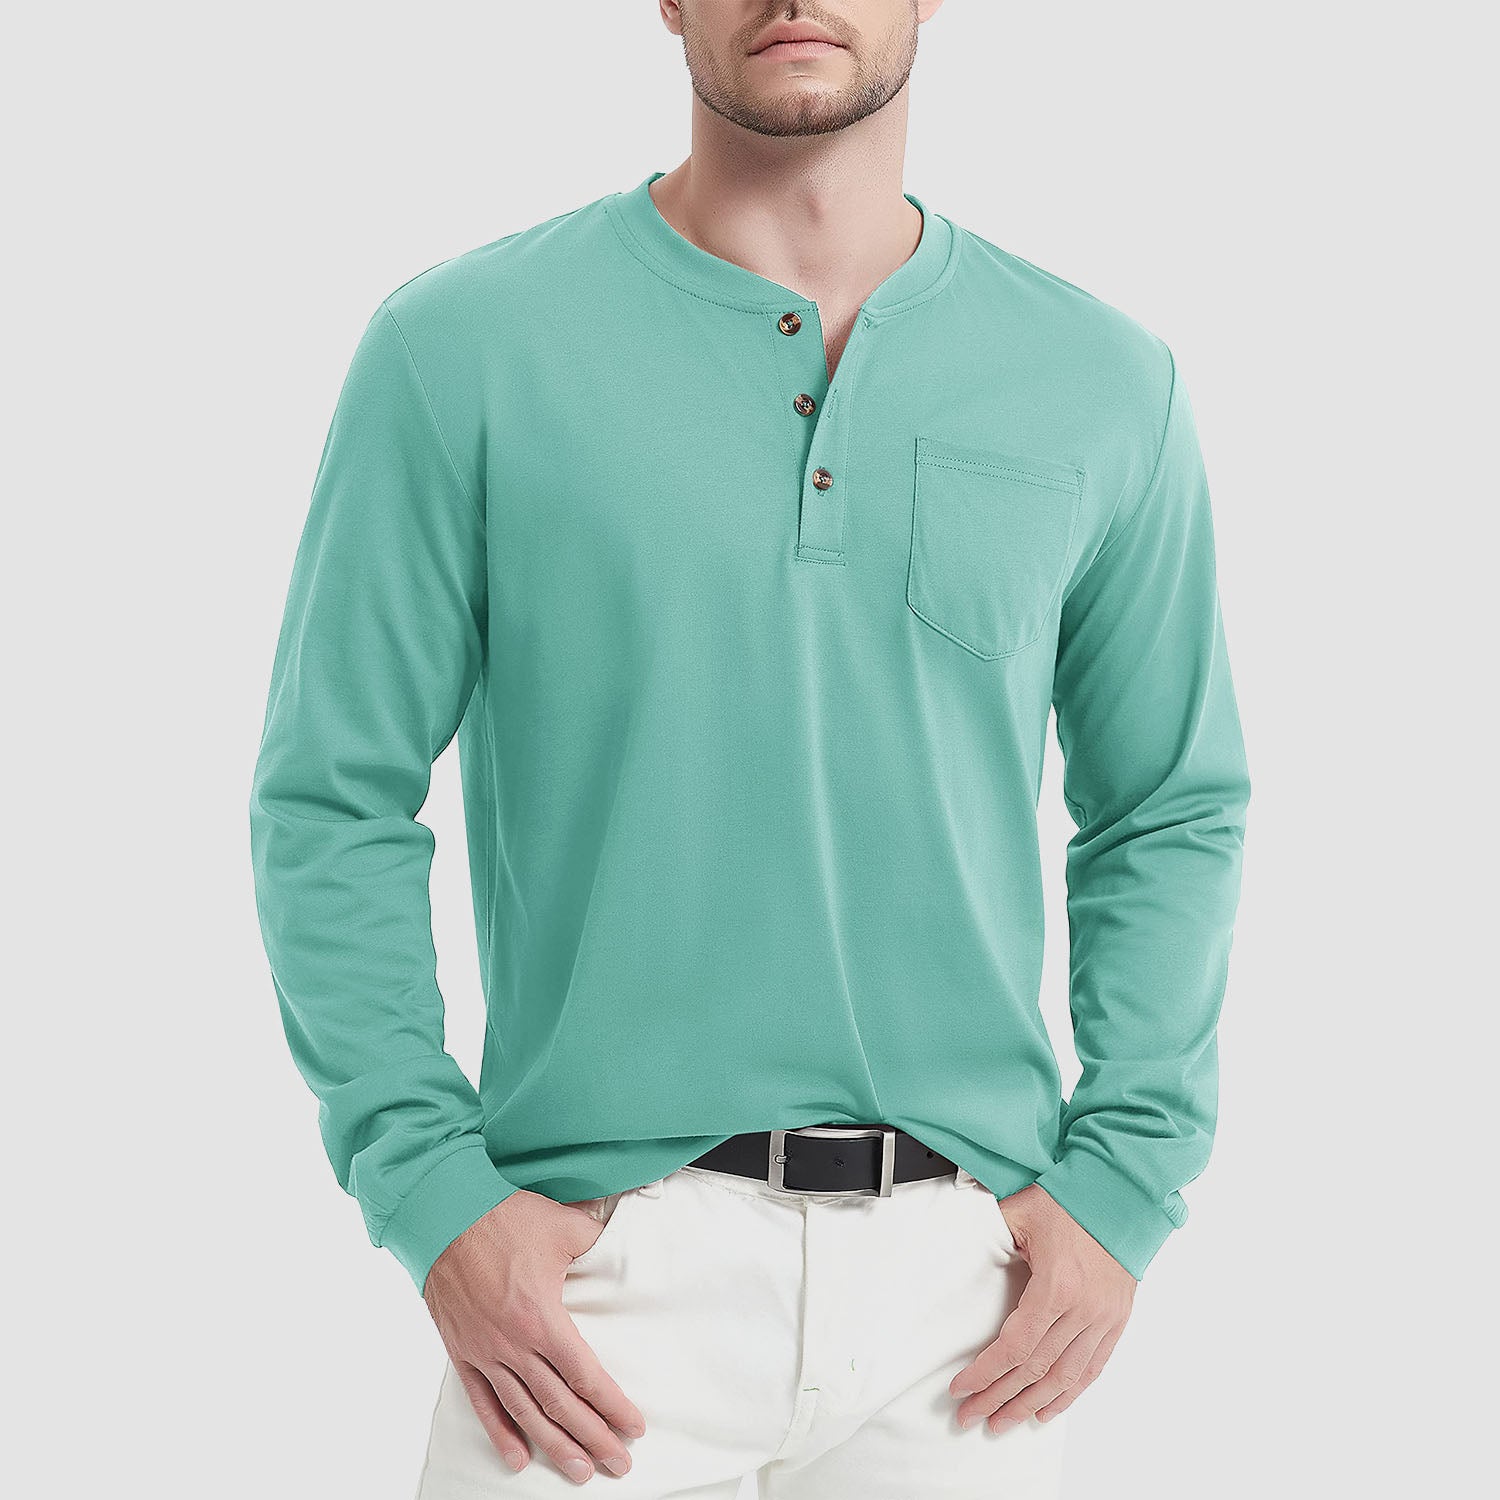 Men's Henley Shirt Cotton Long Sleeve Shirts